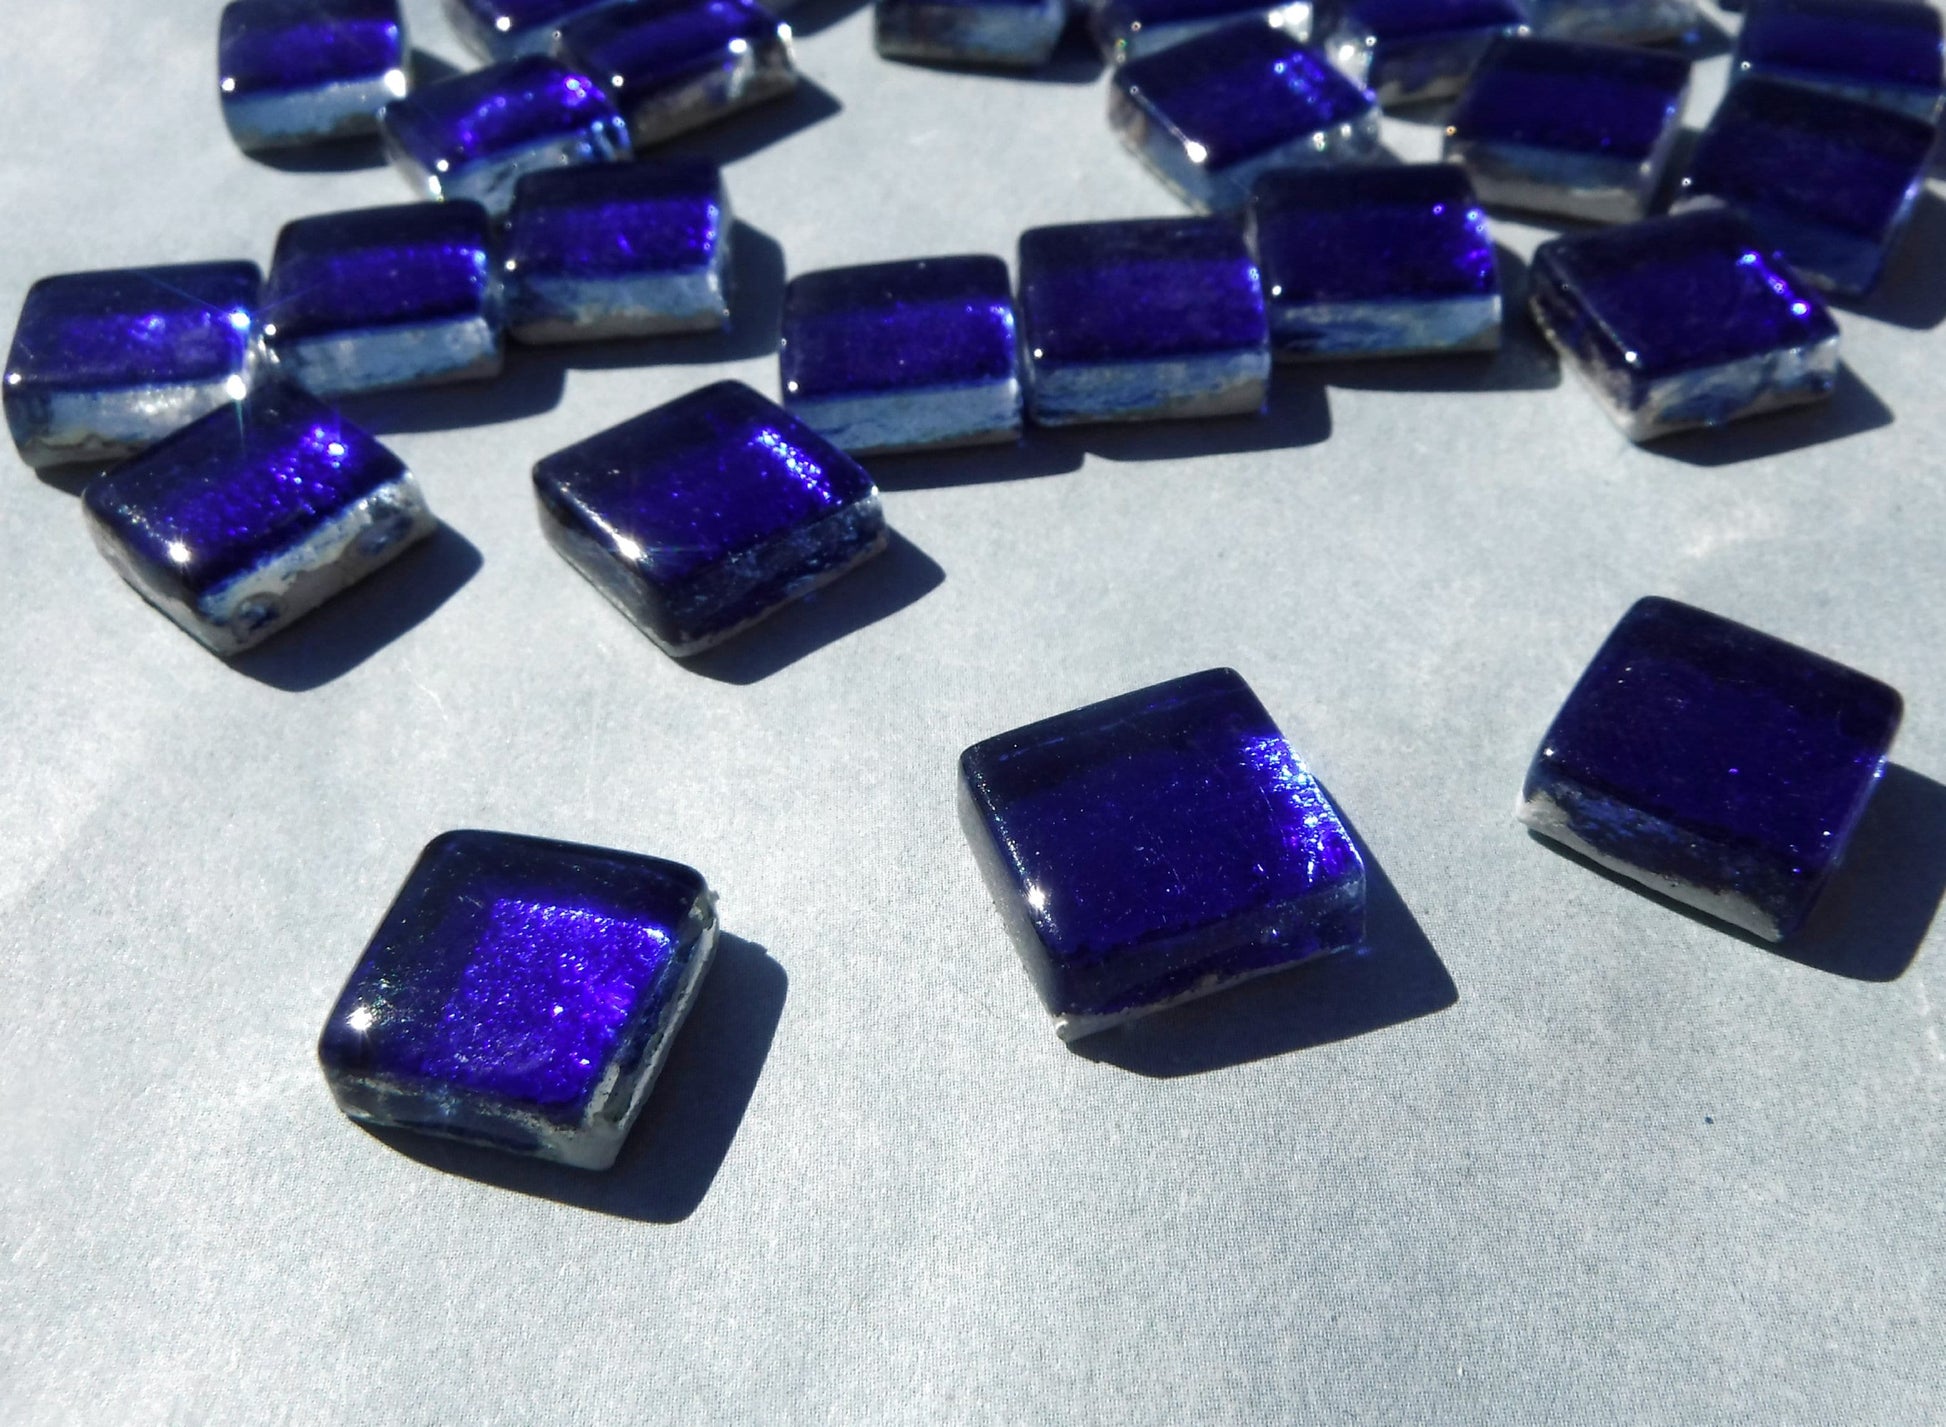 Cobalt Blue Foil Square Crystal Tiles - 12mm - 50g - Approx 25 Metallic Glass Mosaic Tiles